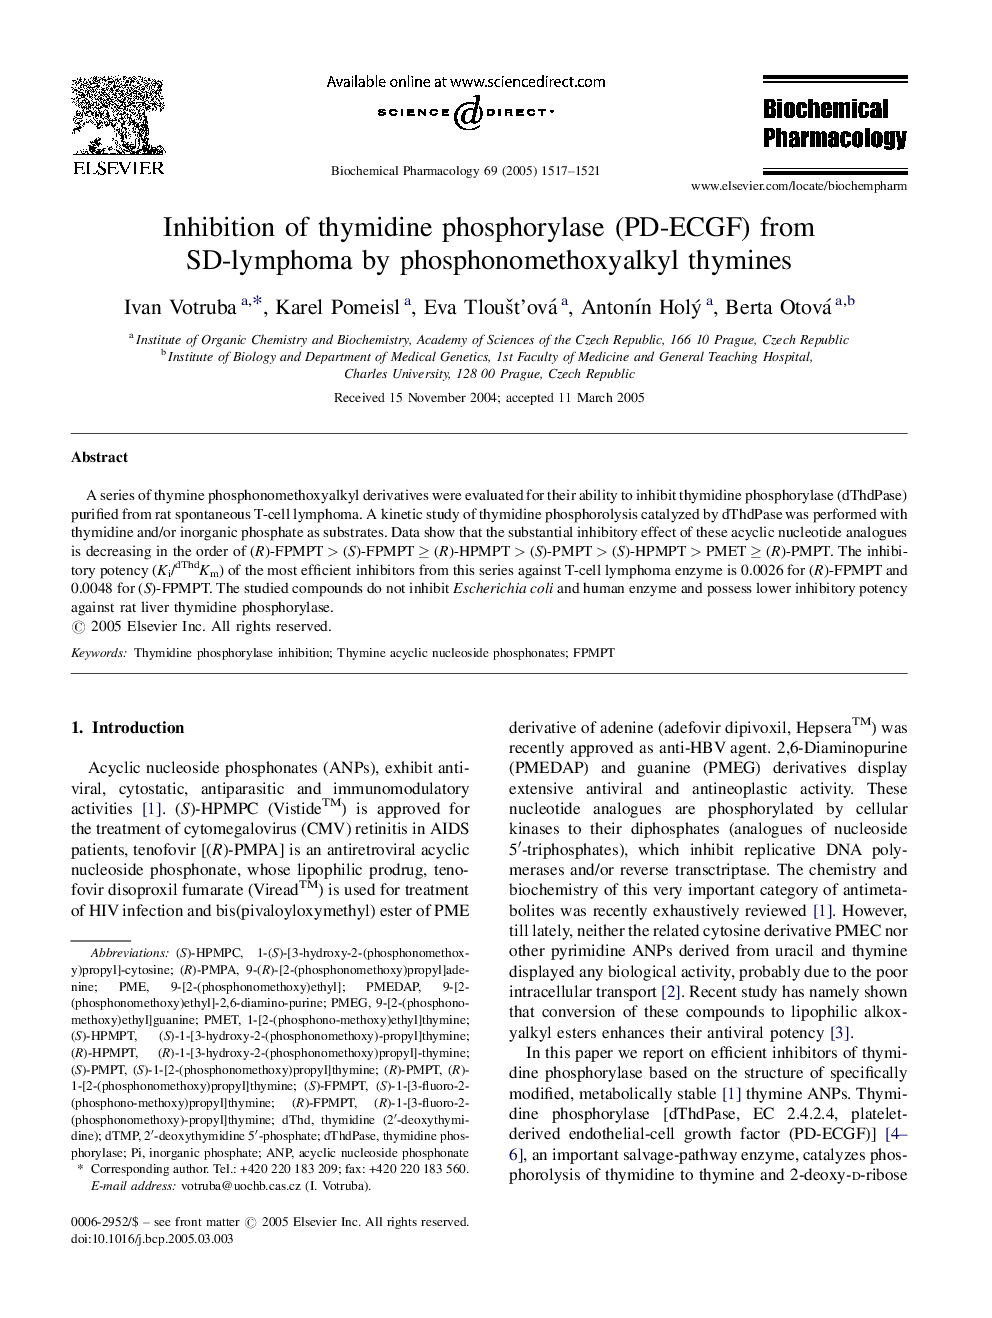 Inhibition of thymidine phosphorylase (PD-ECGF) from SD-lymphoma by phosphonomethoxyalkyl thymines